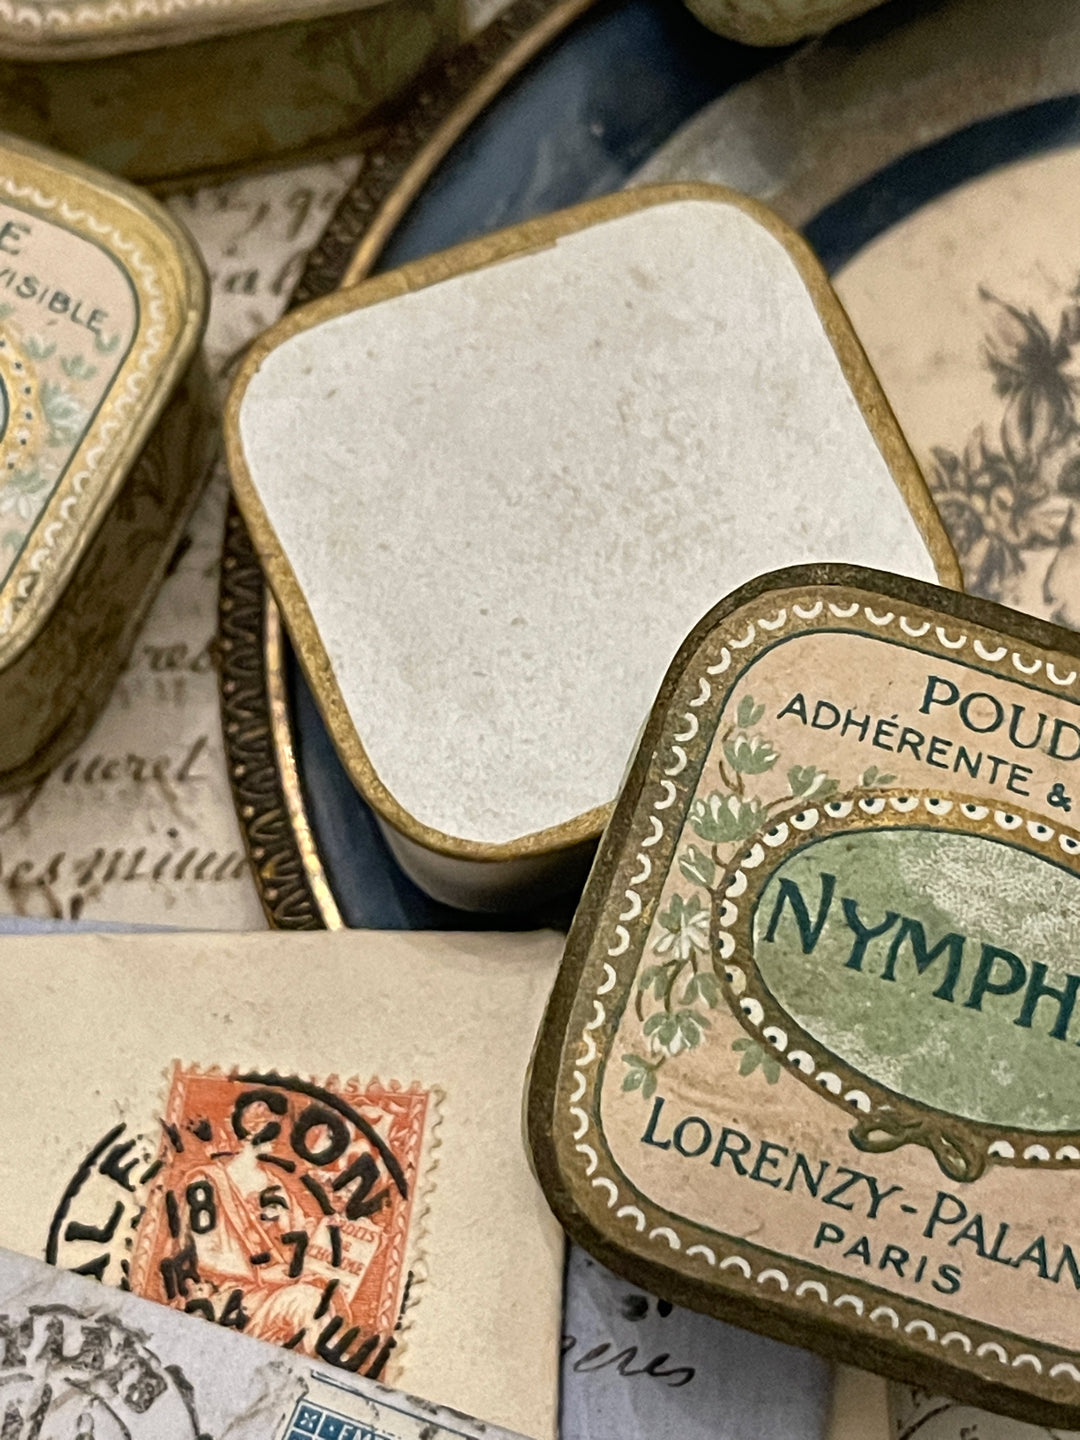 Original Antique French Lorenzy - Palanca - Paris boxes